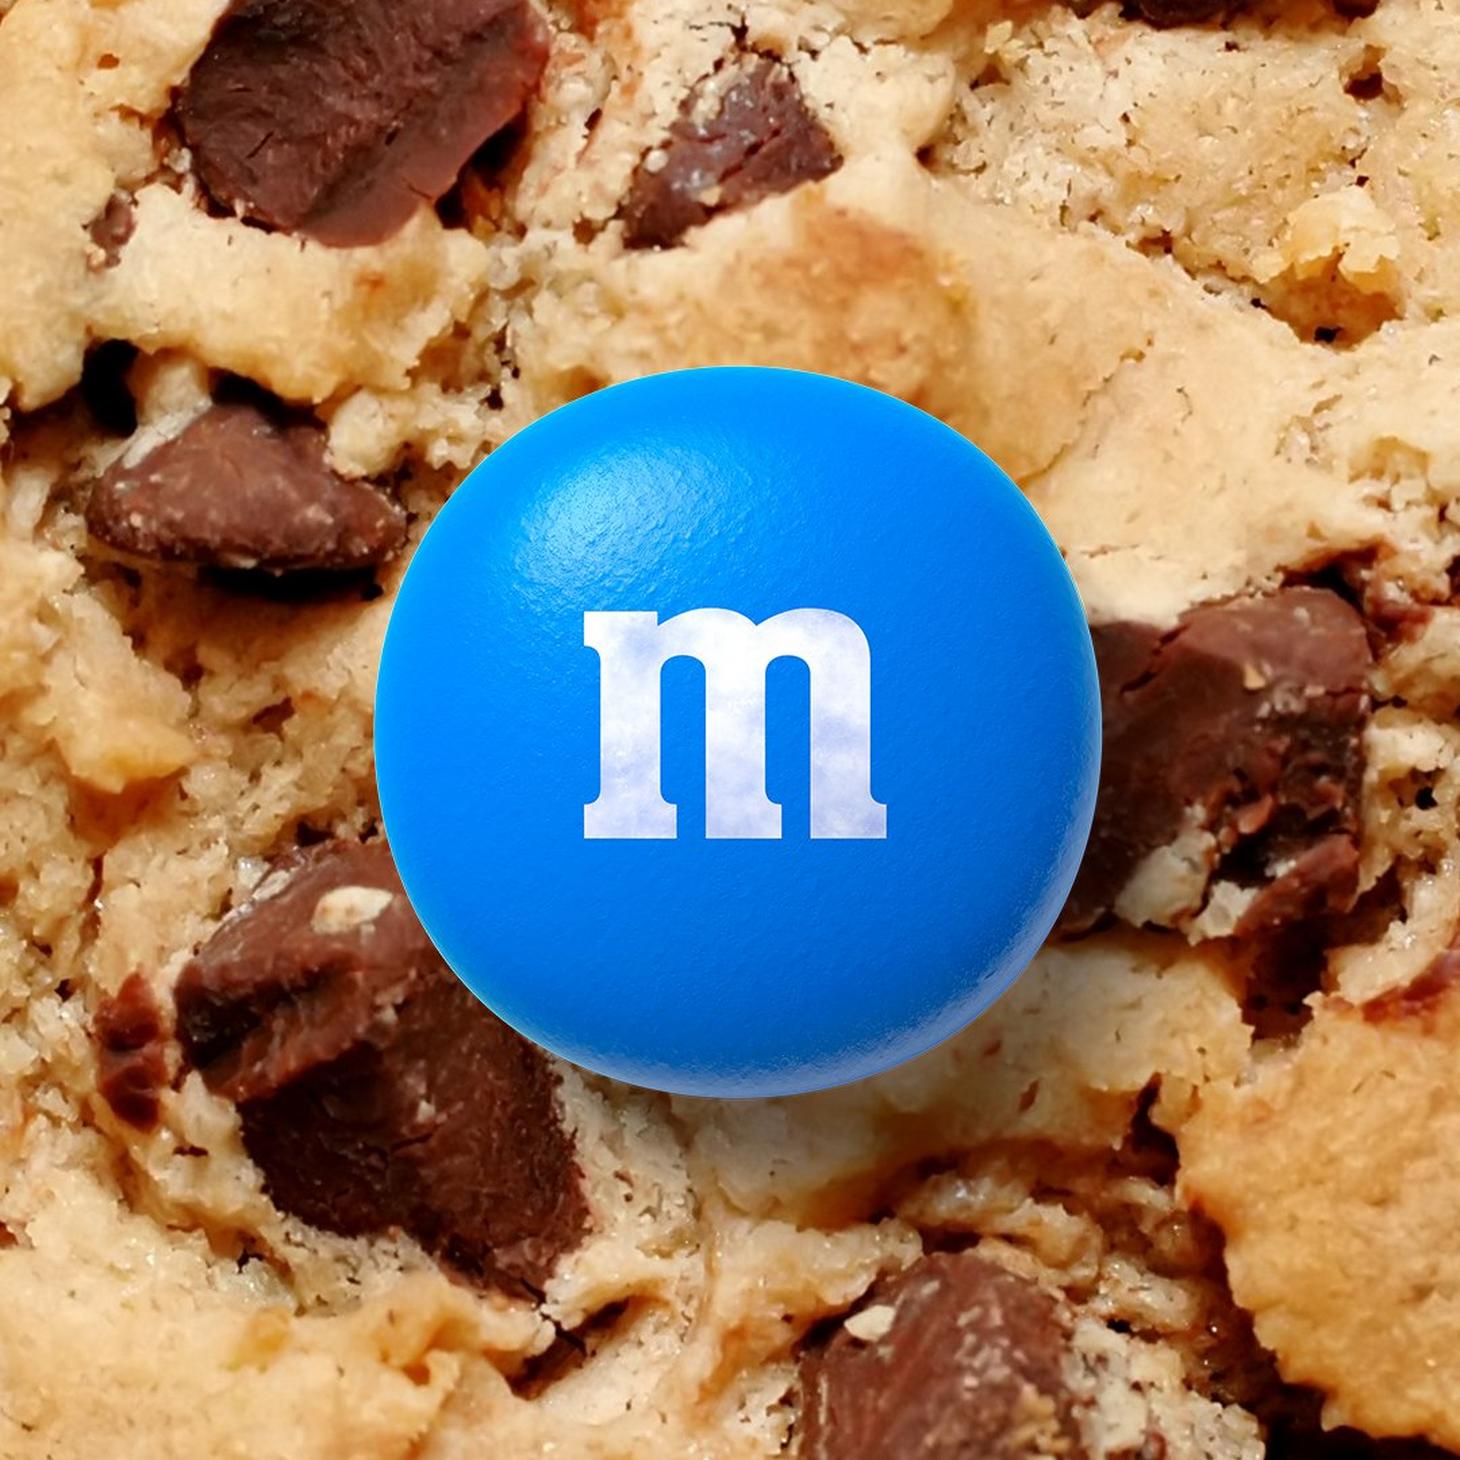 M&M's Chocolate Candies, Crunchy Cookie 1.35 oz